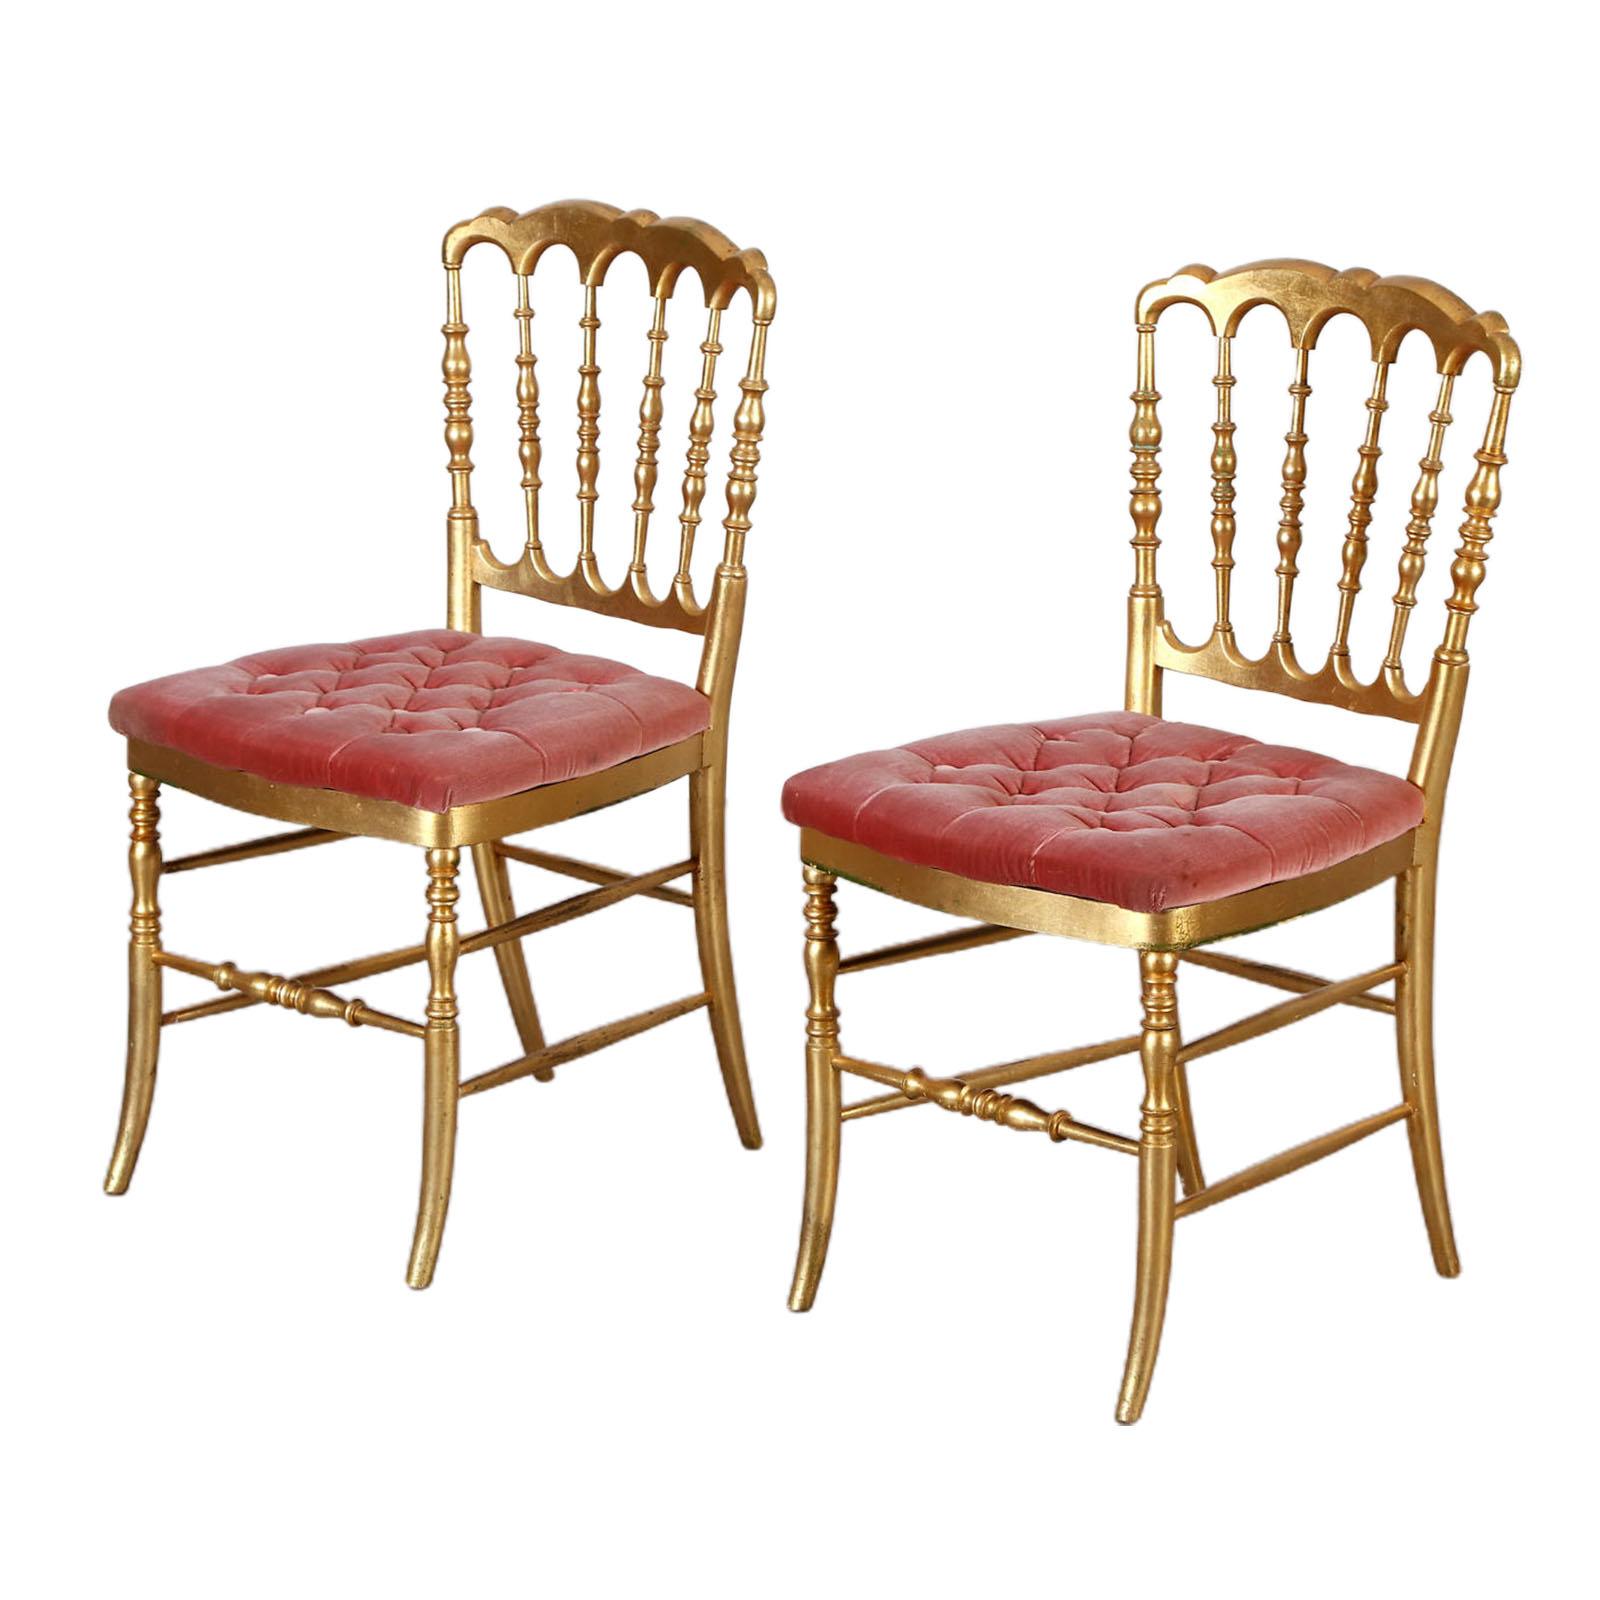 Nice Pair of 19th Century Gilt Wood Chiavari Chairs For Sale